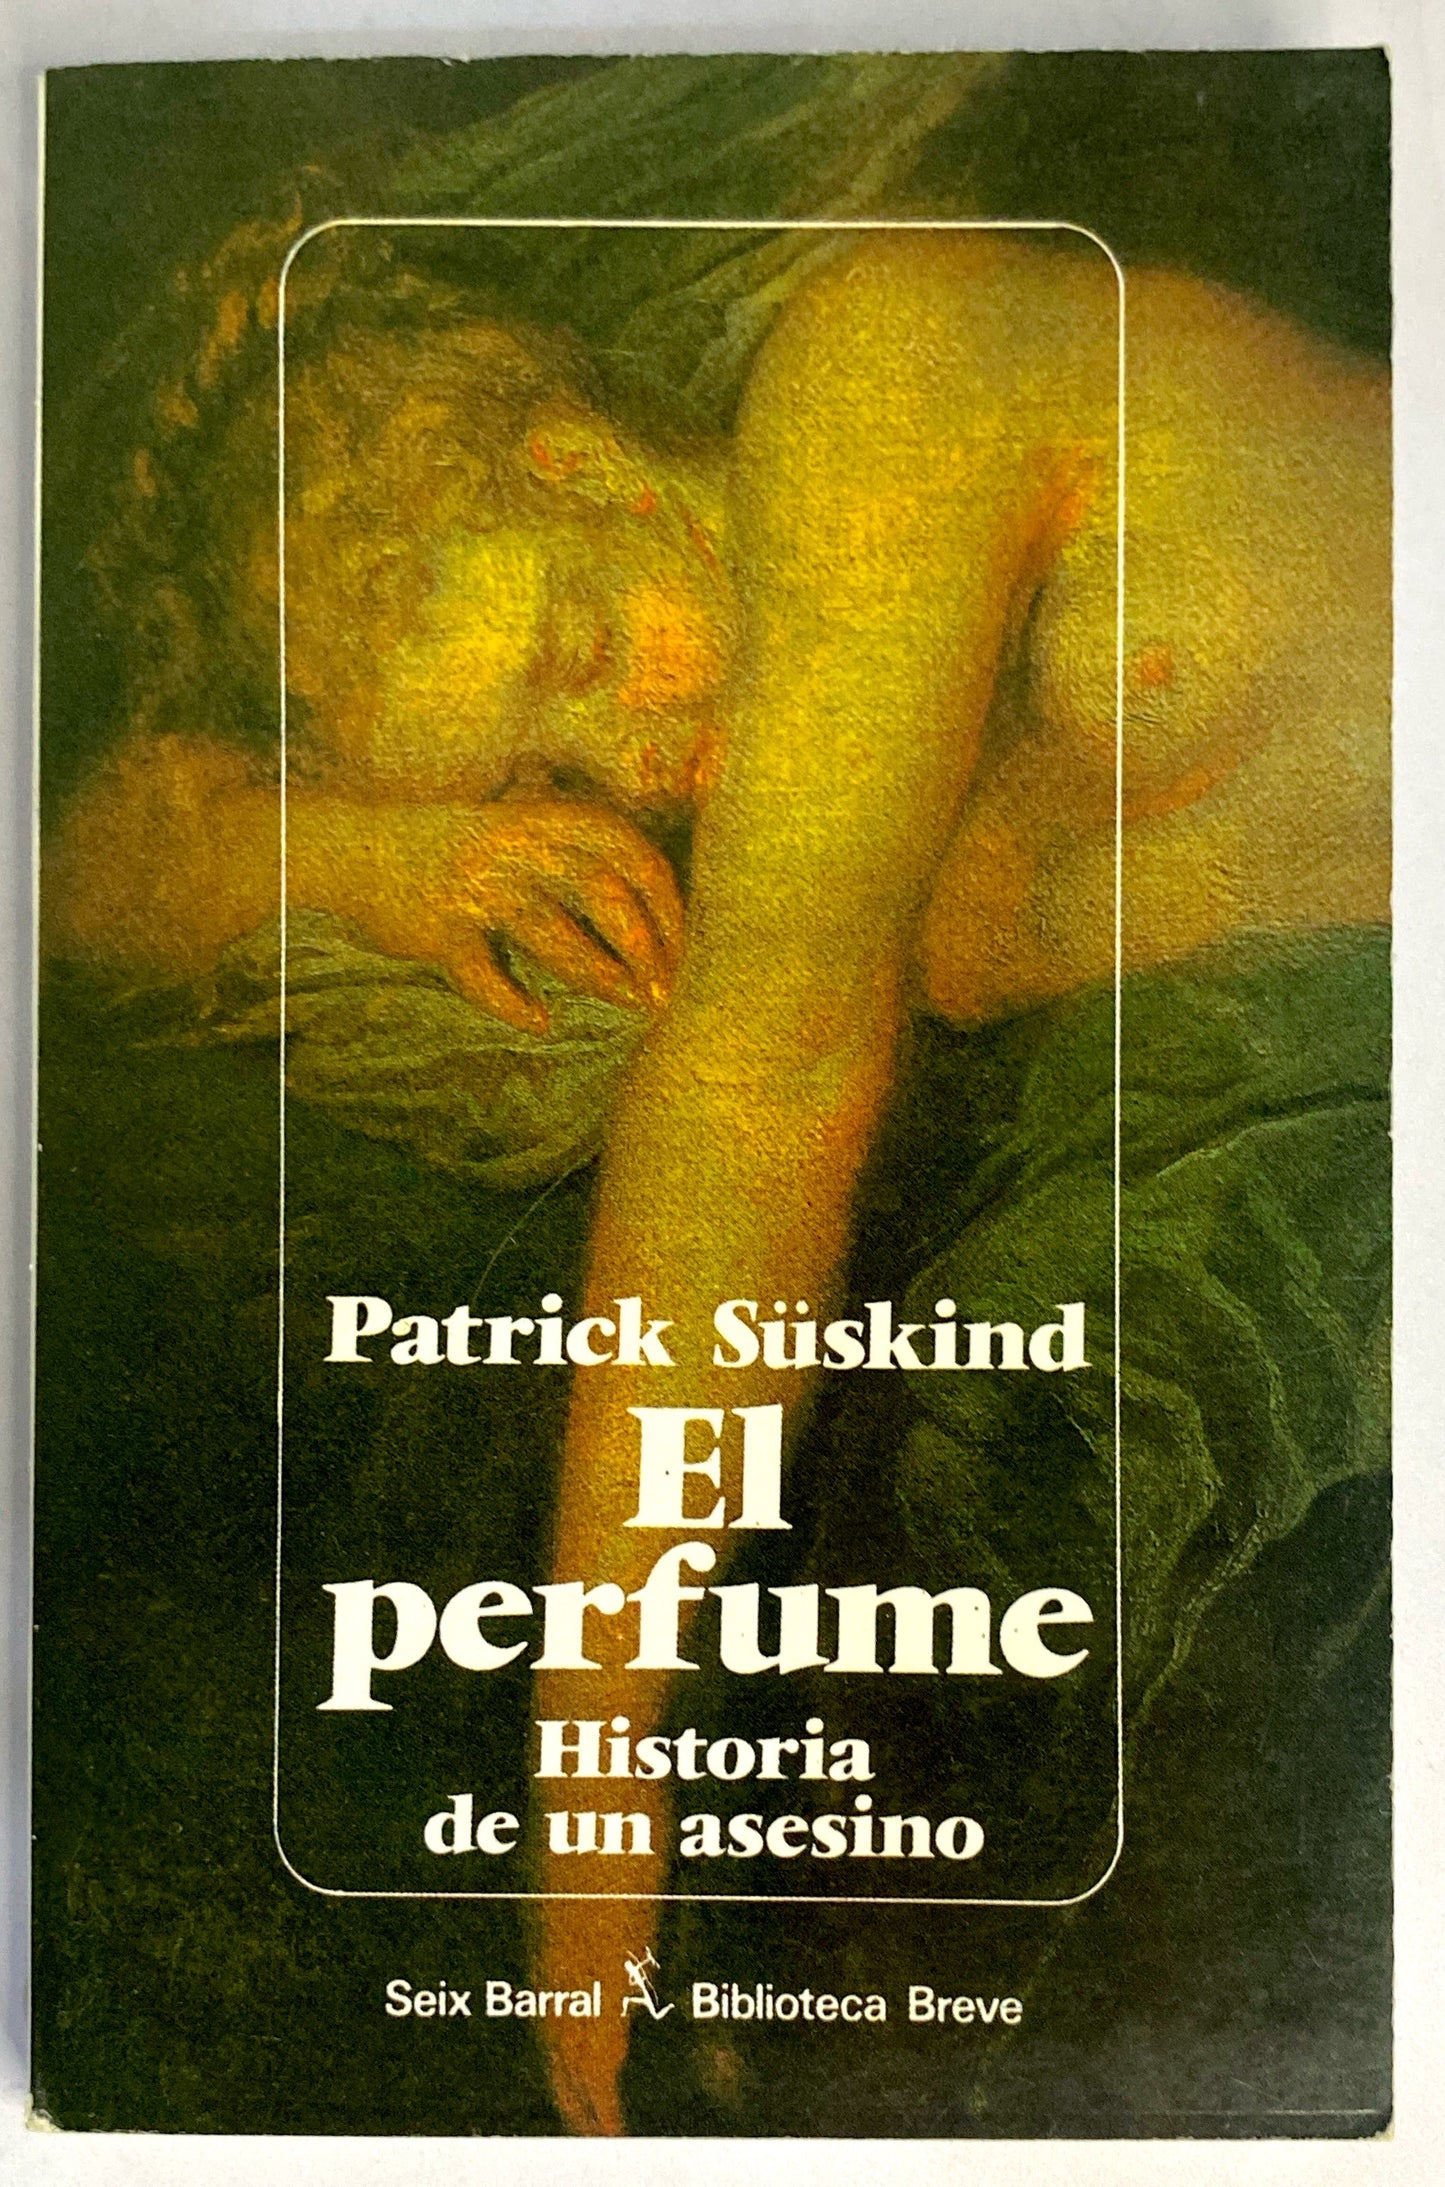 El perfume | Patrick Suskind